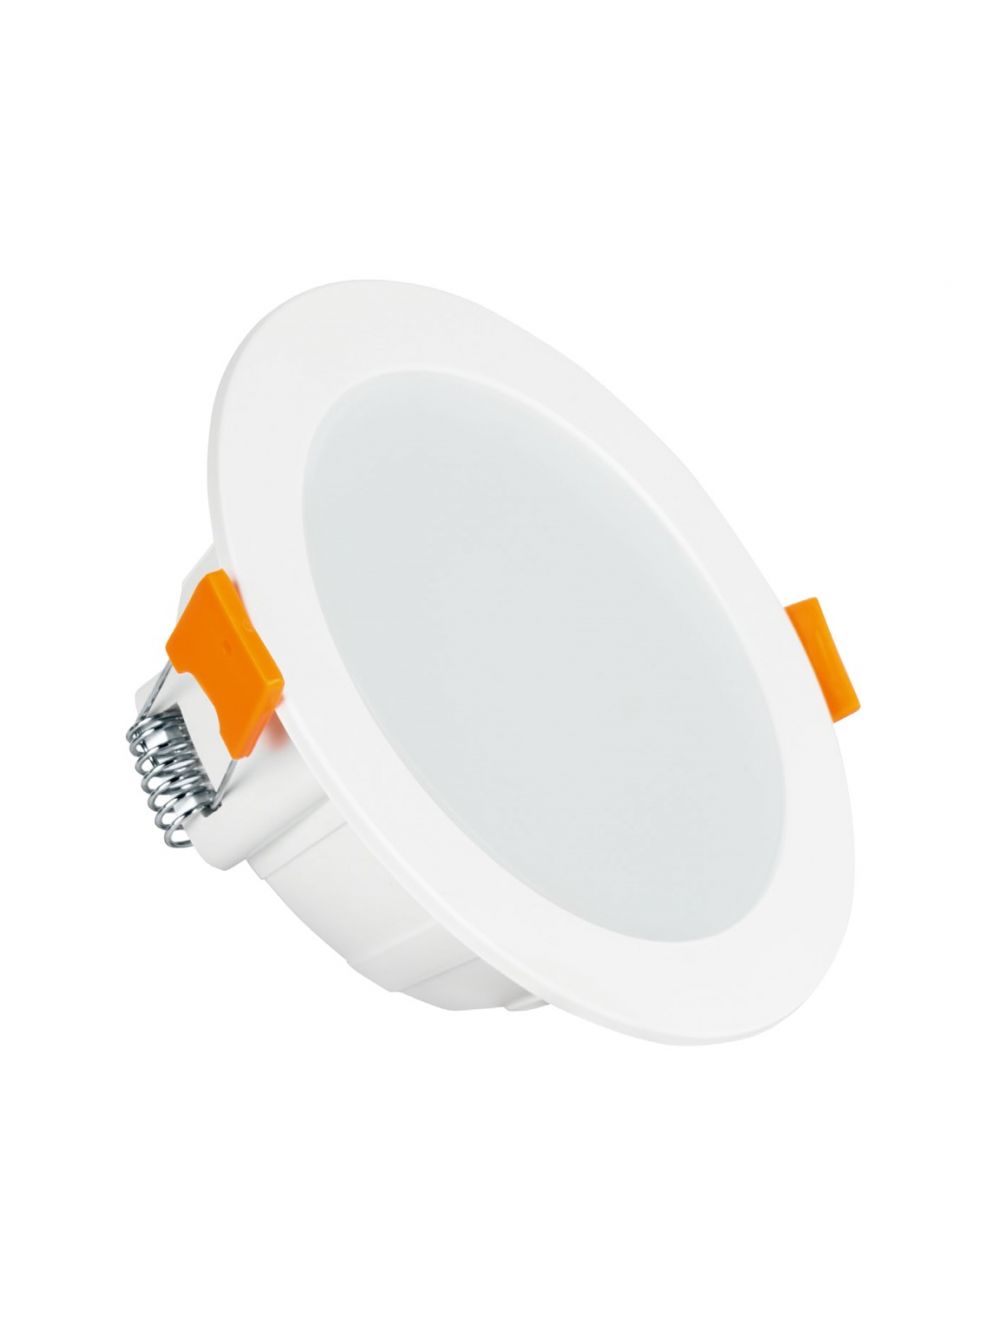 Spot LED Encastrable Extra-Plat 12W - Blanc Chaud 3000K